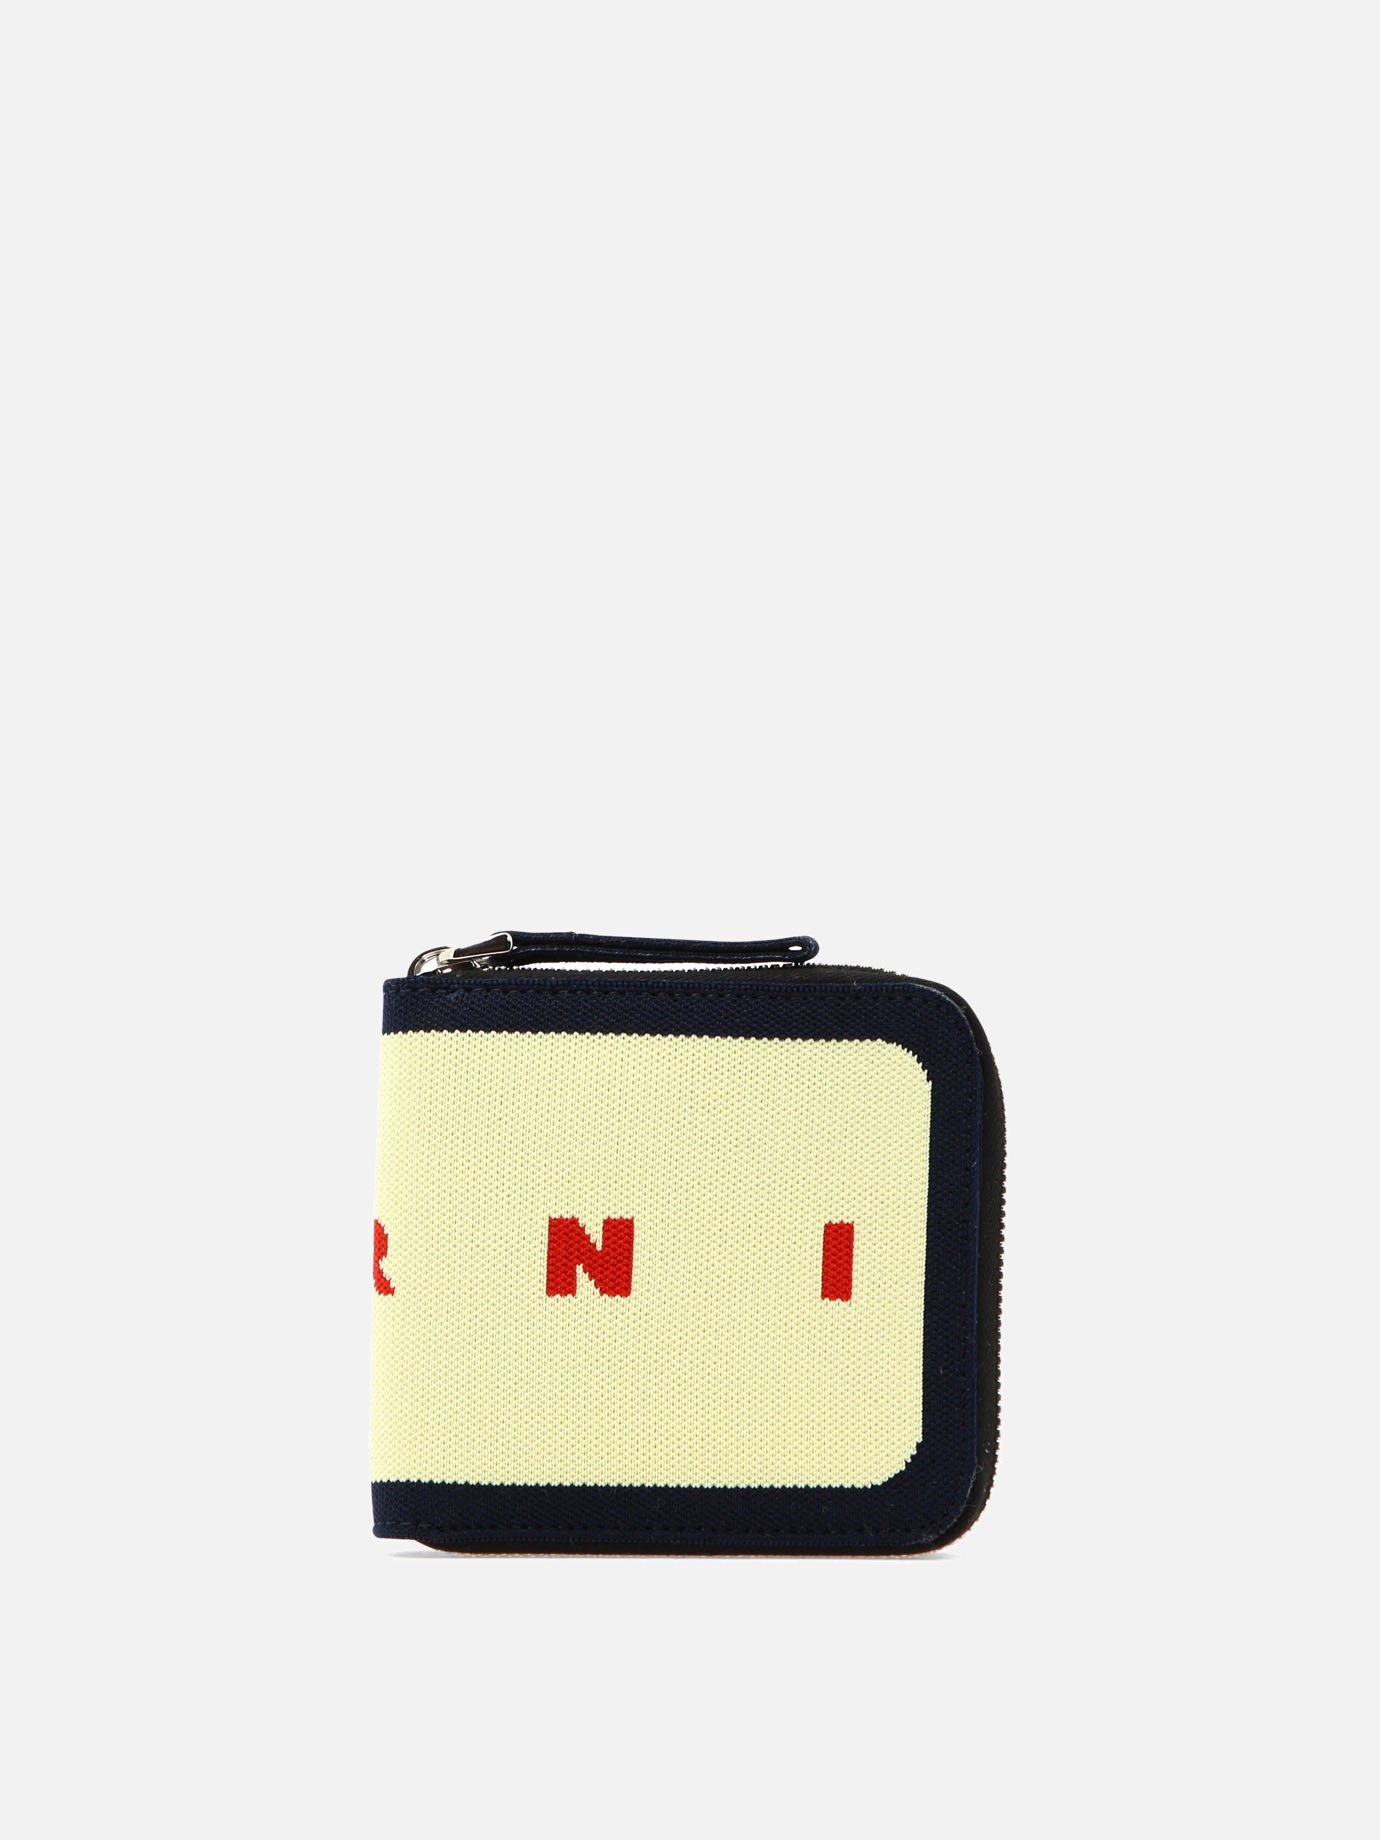 Zipped wallet by Marni